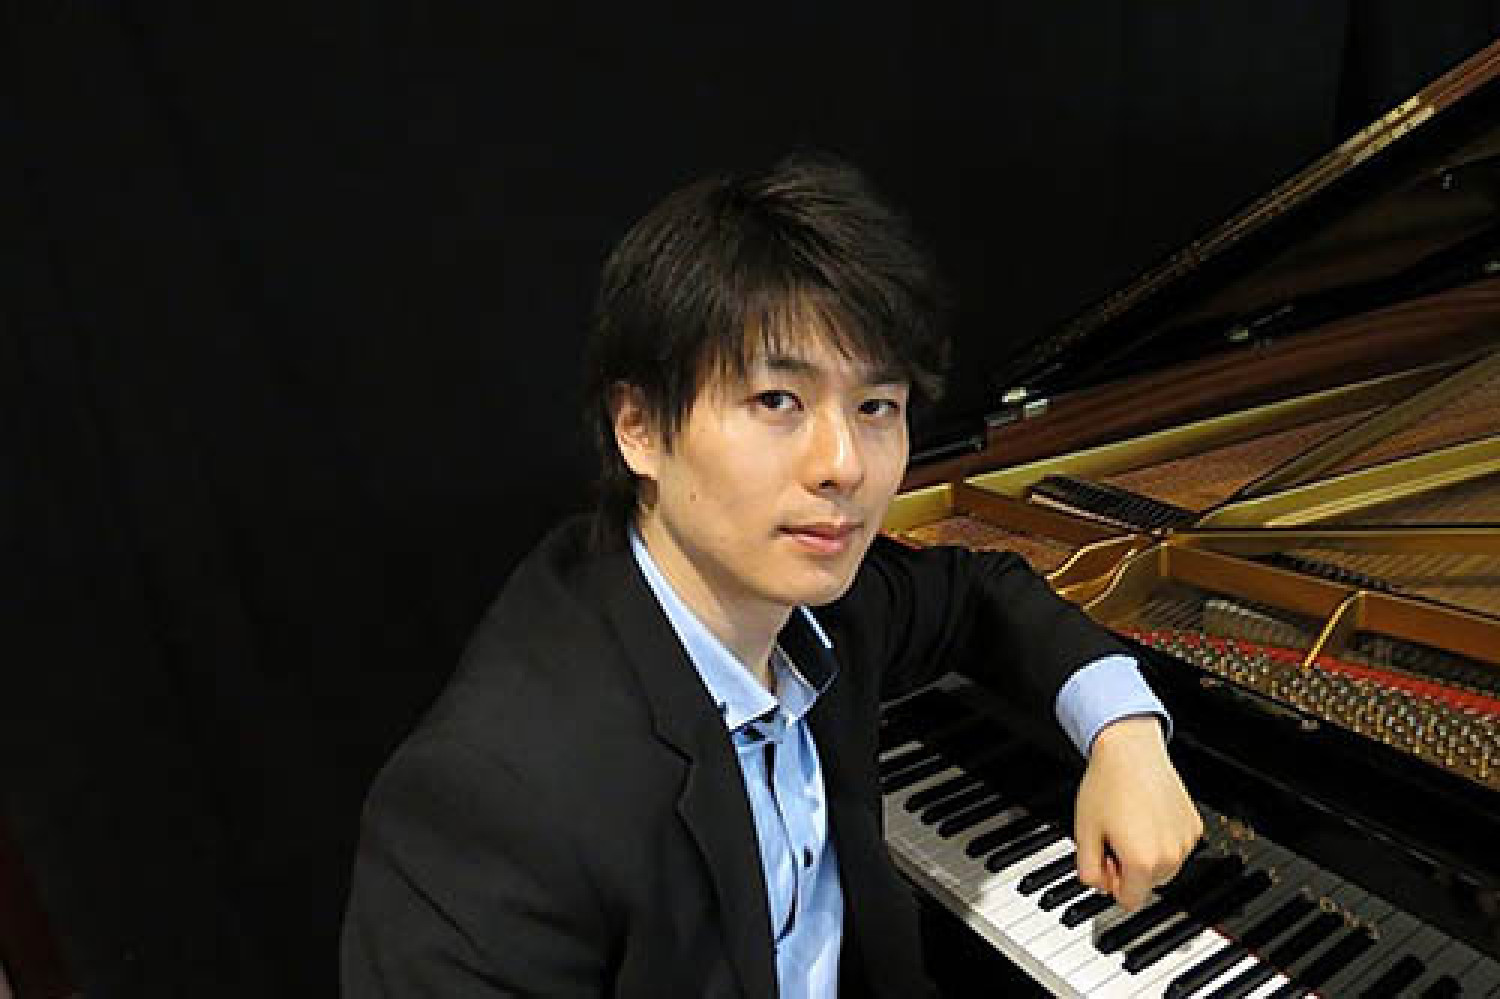 Le Fonds soutien le récital de Piano de Kotaro Fukuma, samedi 17 juin 2023 à 20h30, salle Cortot 